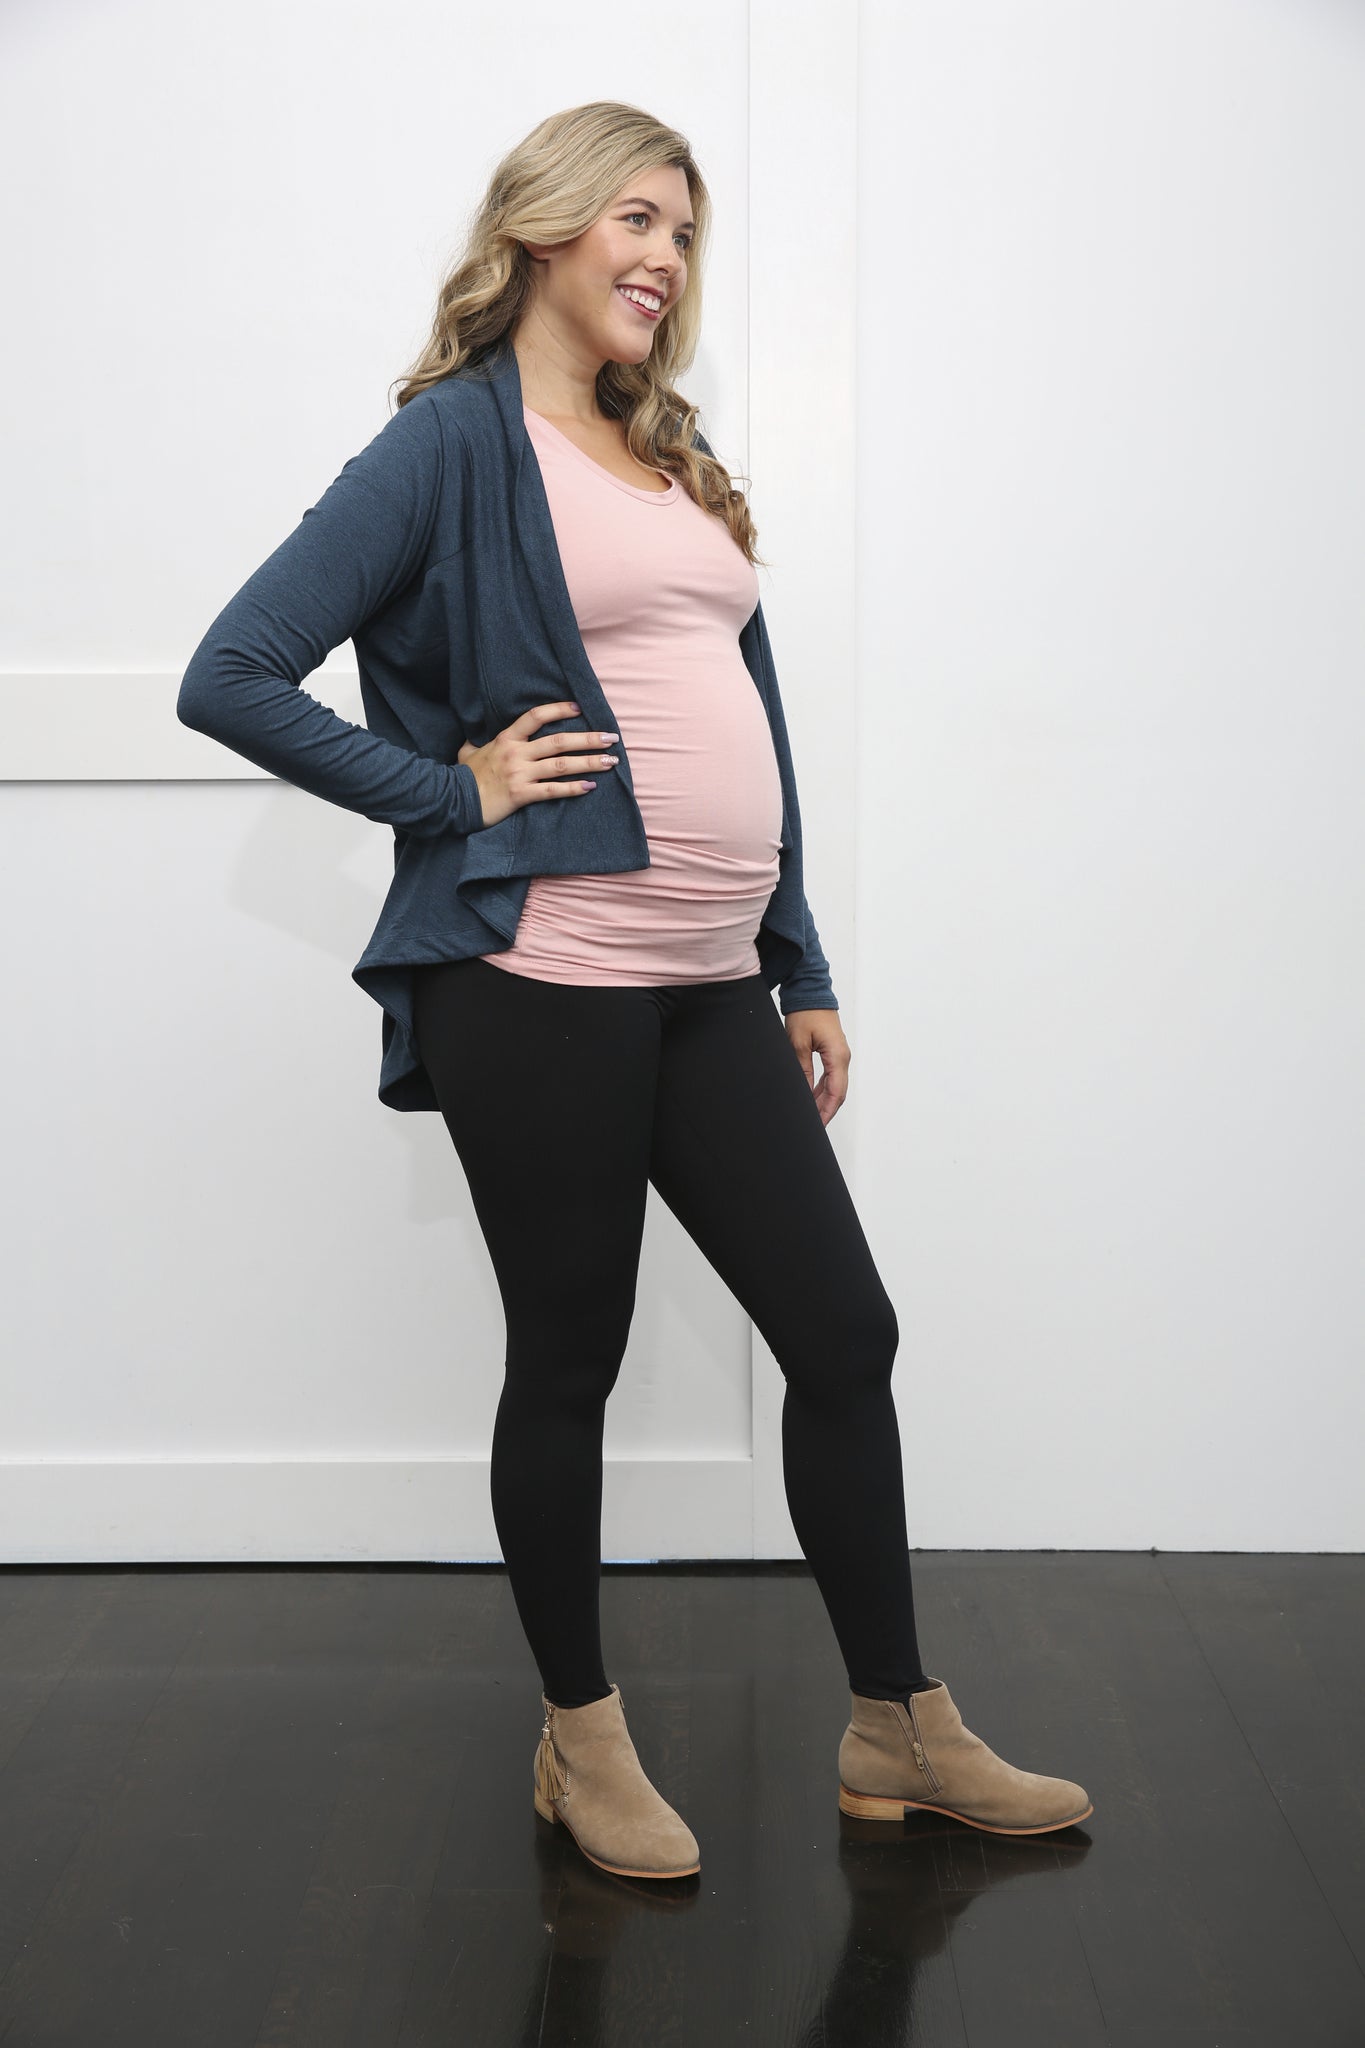 Folding Pregnancy Leggings - High Waist or Under-Belly Support